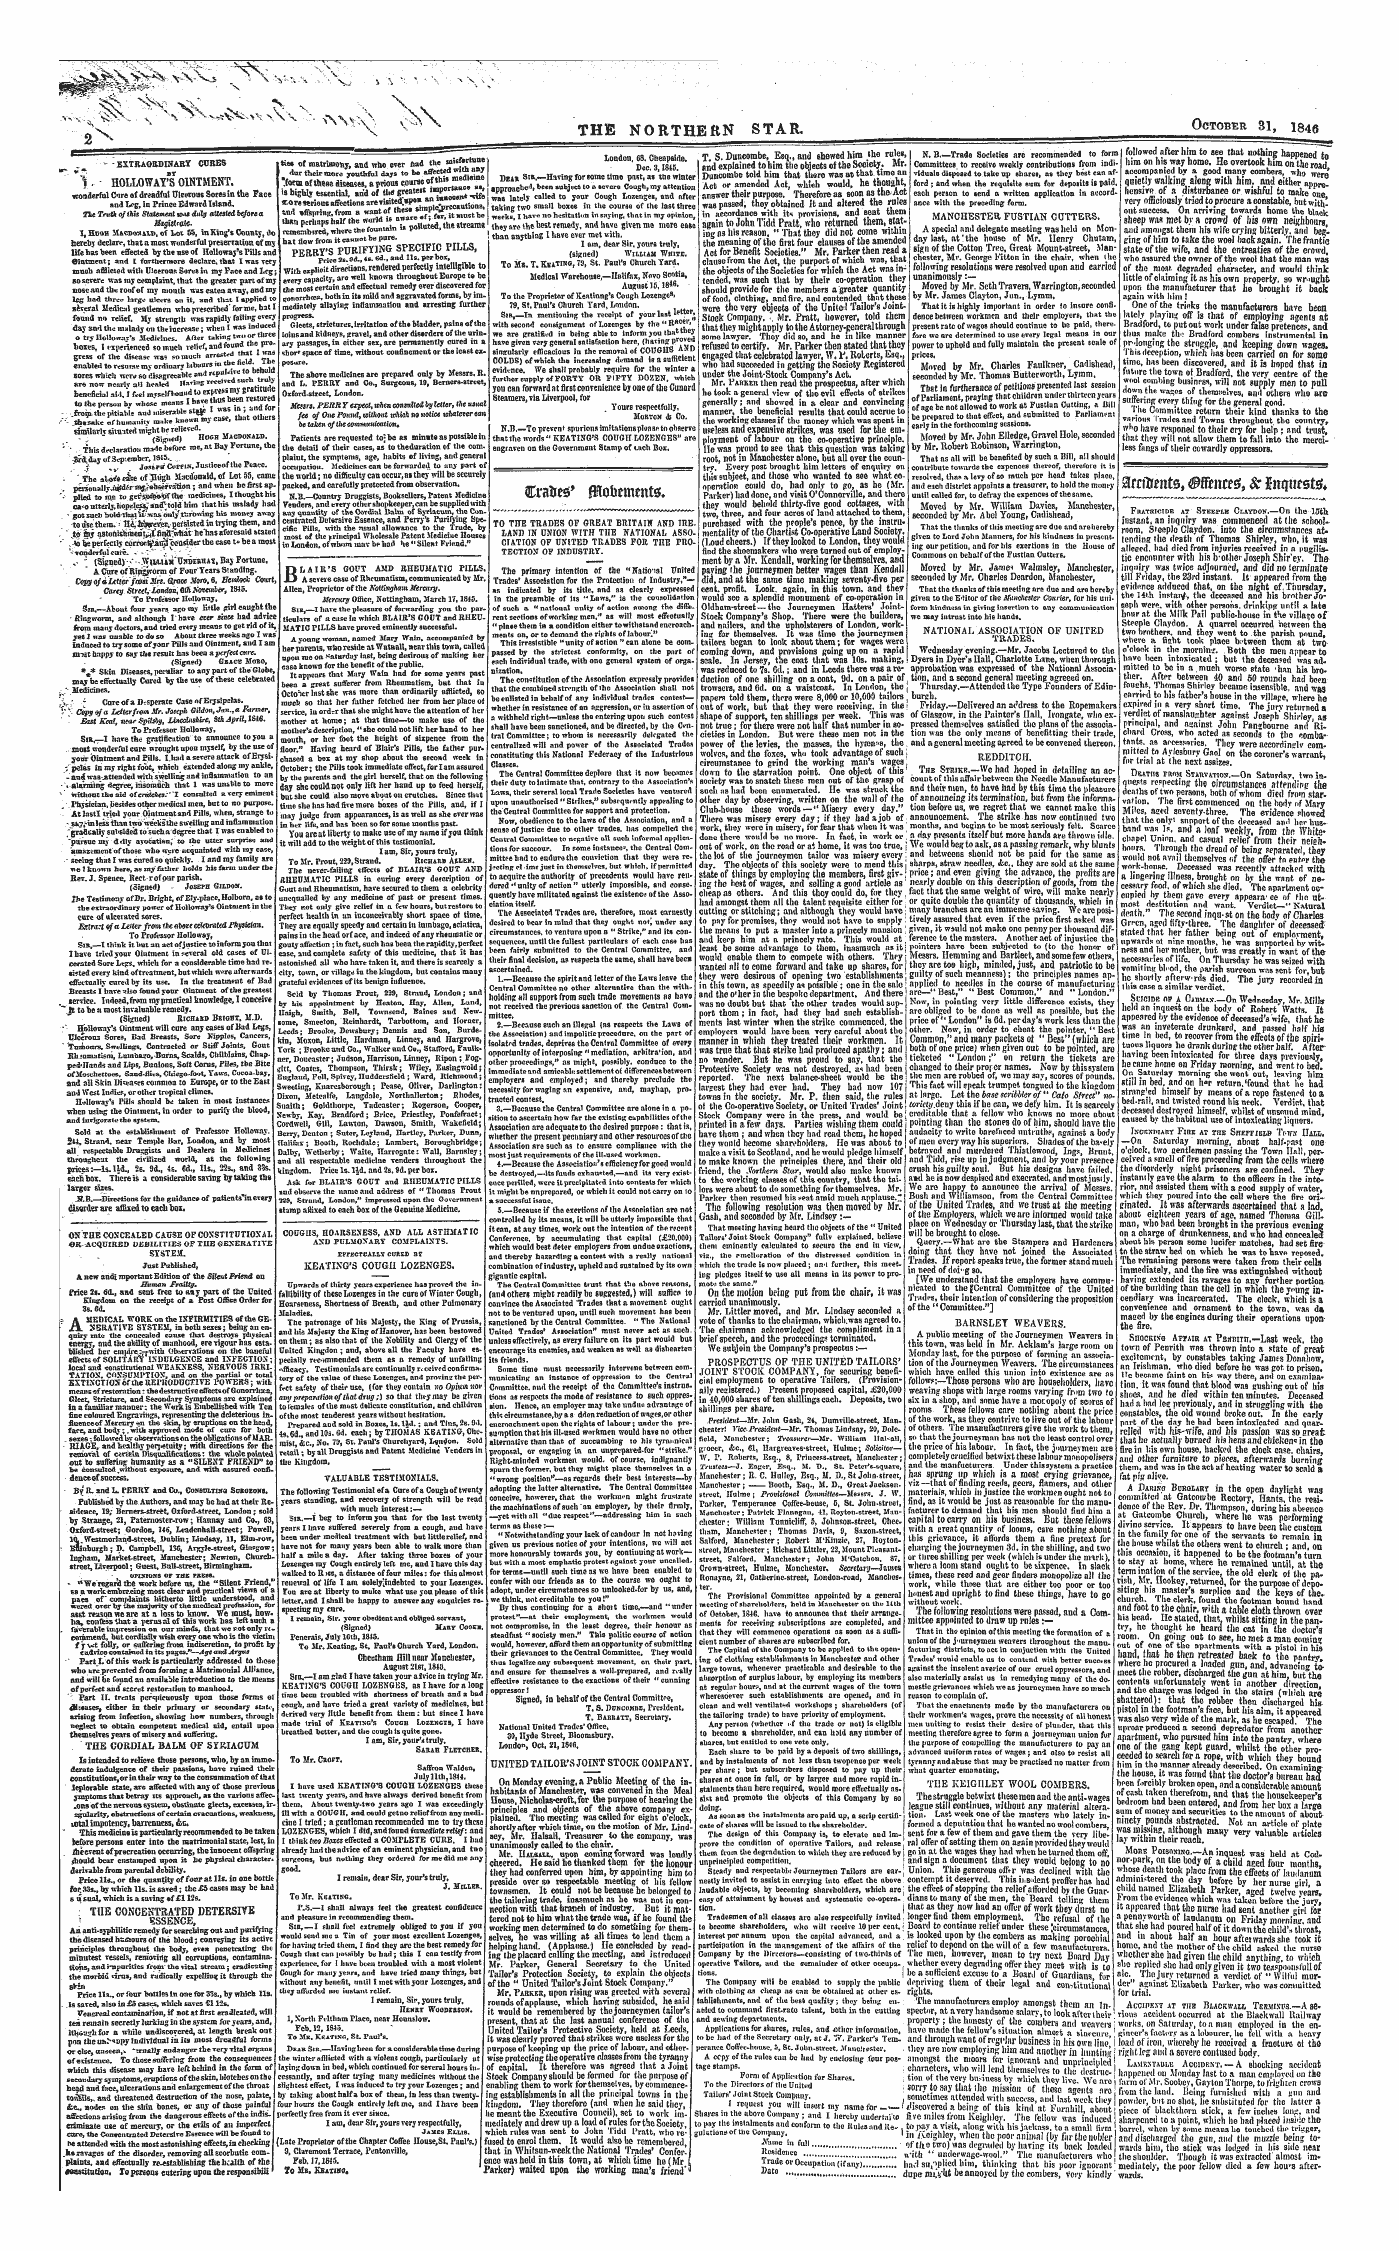 Northern Star (1837-1852): jS F Y, 1st edition - [ . : : - Extraordinary Curbs *\ ~ Sr 1 , Holloways Ointment.